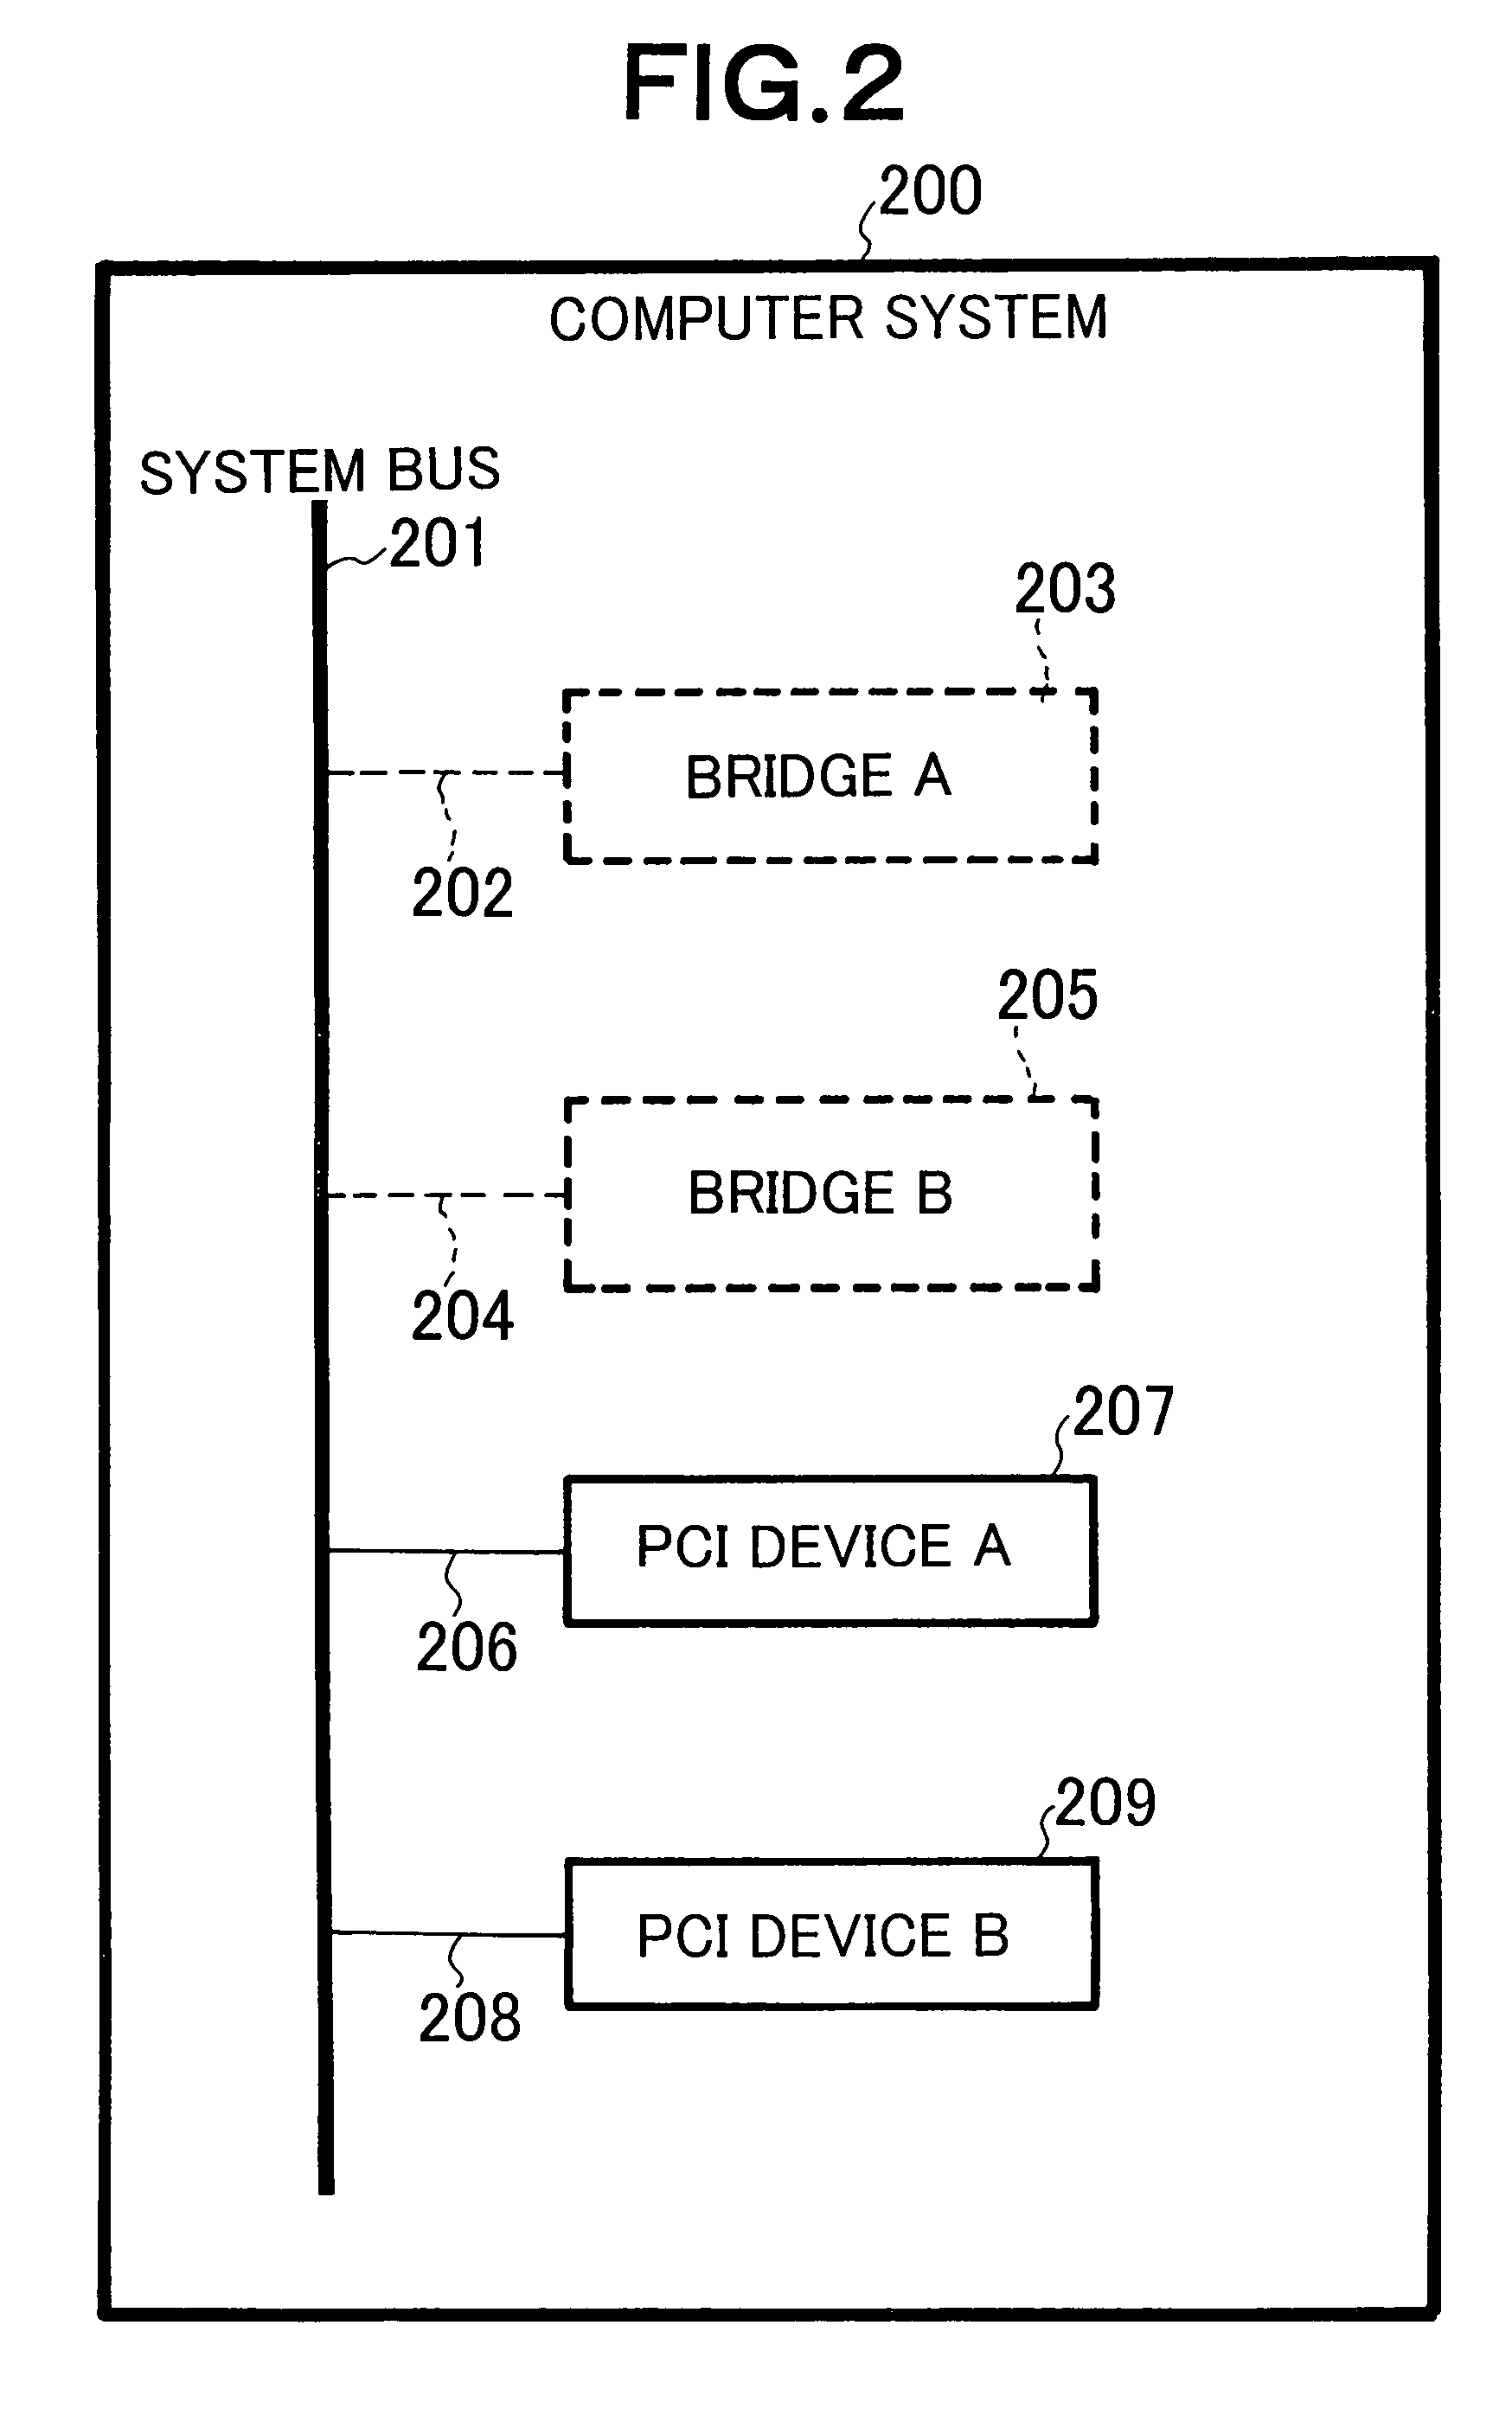 Method and apparatus for describing ACPI machine language in computer having multibridge PCI structure, and program thereof